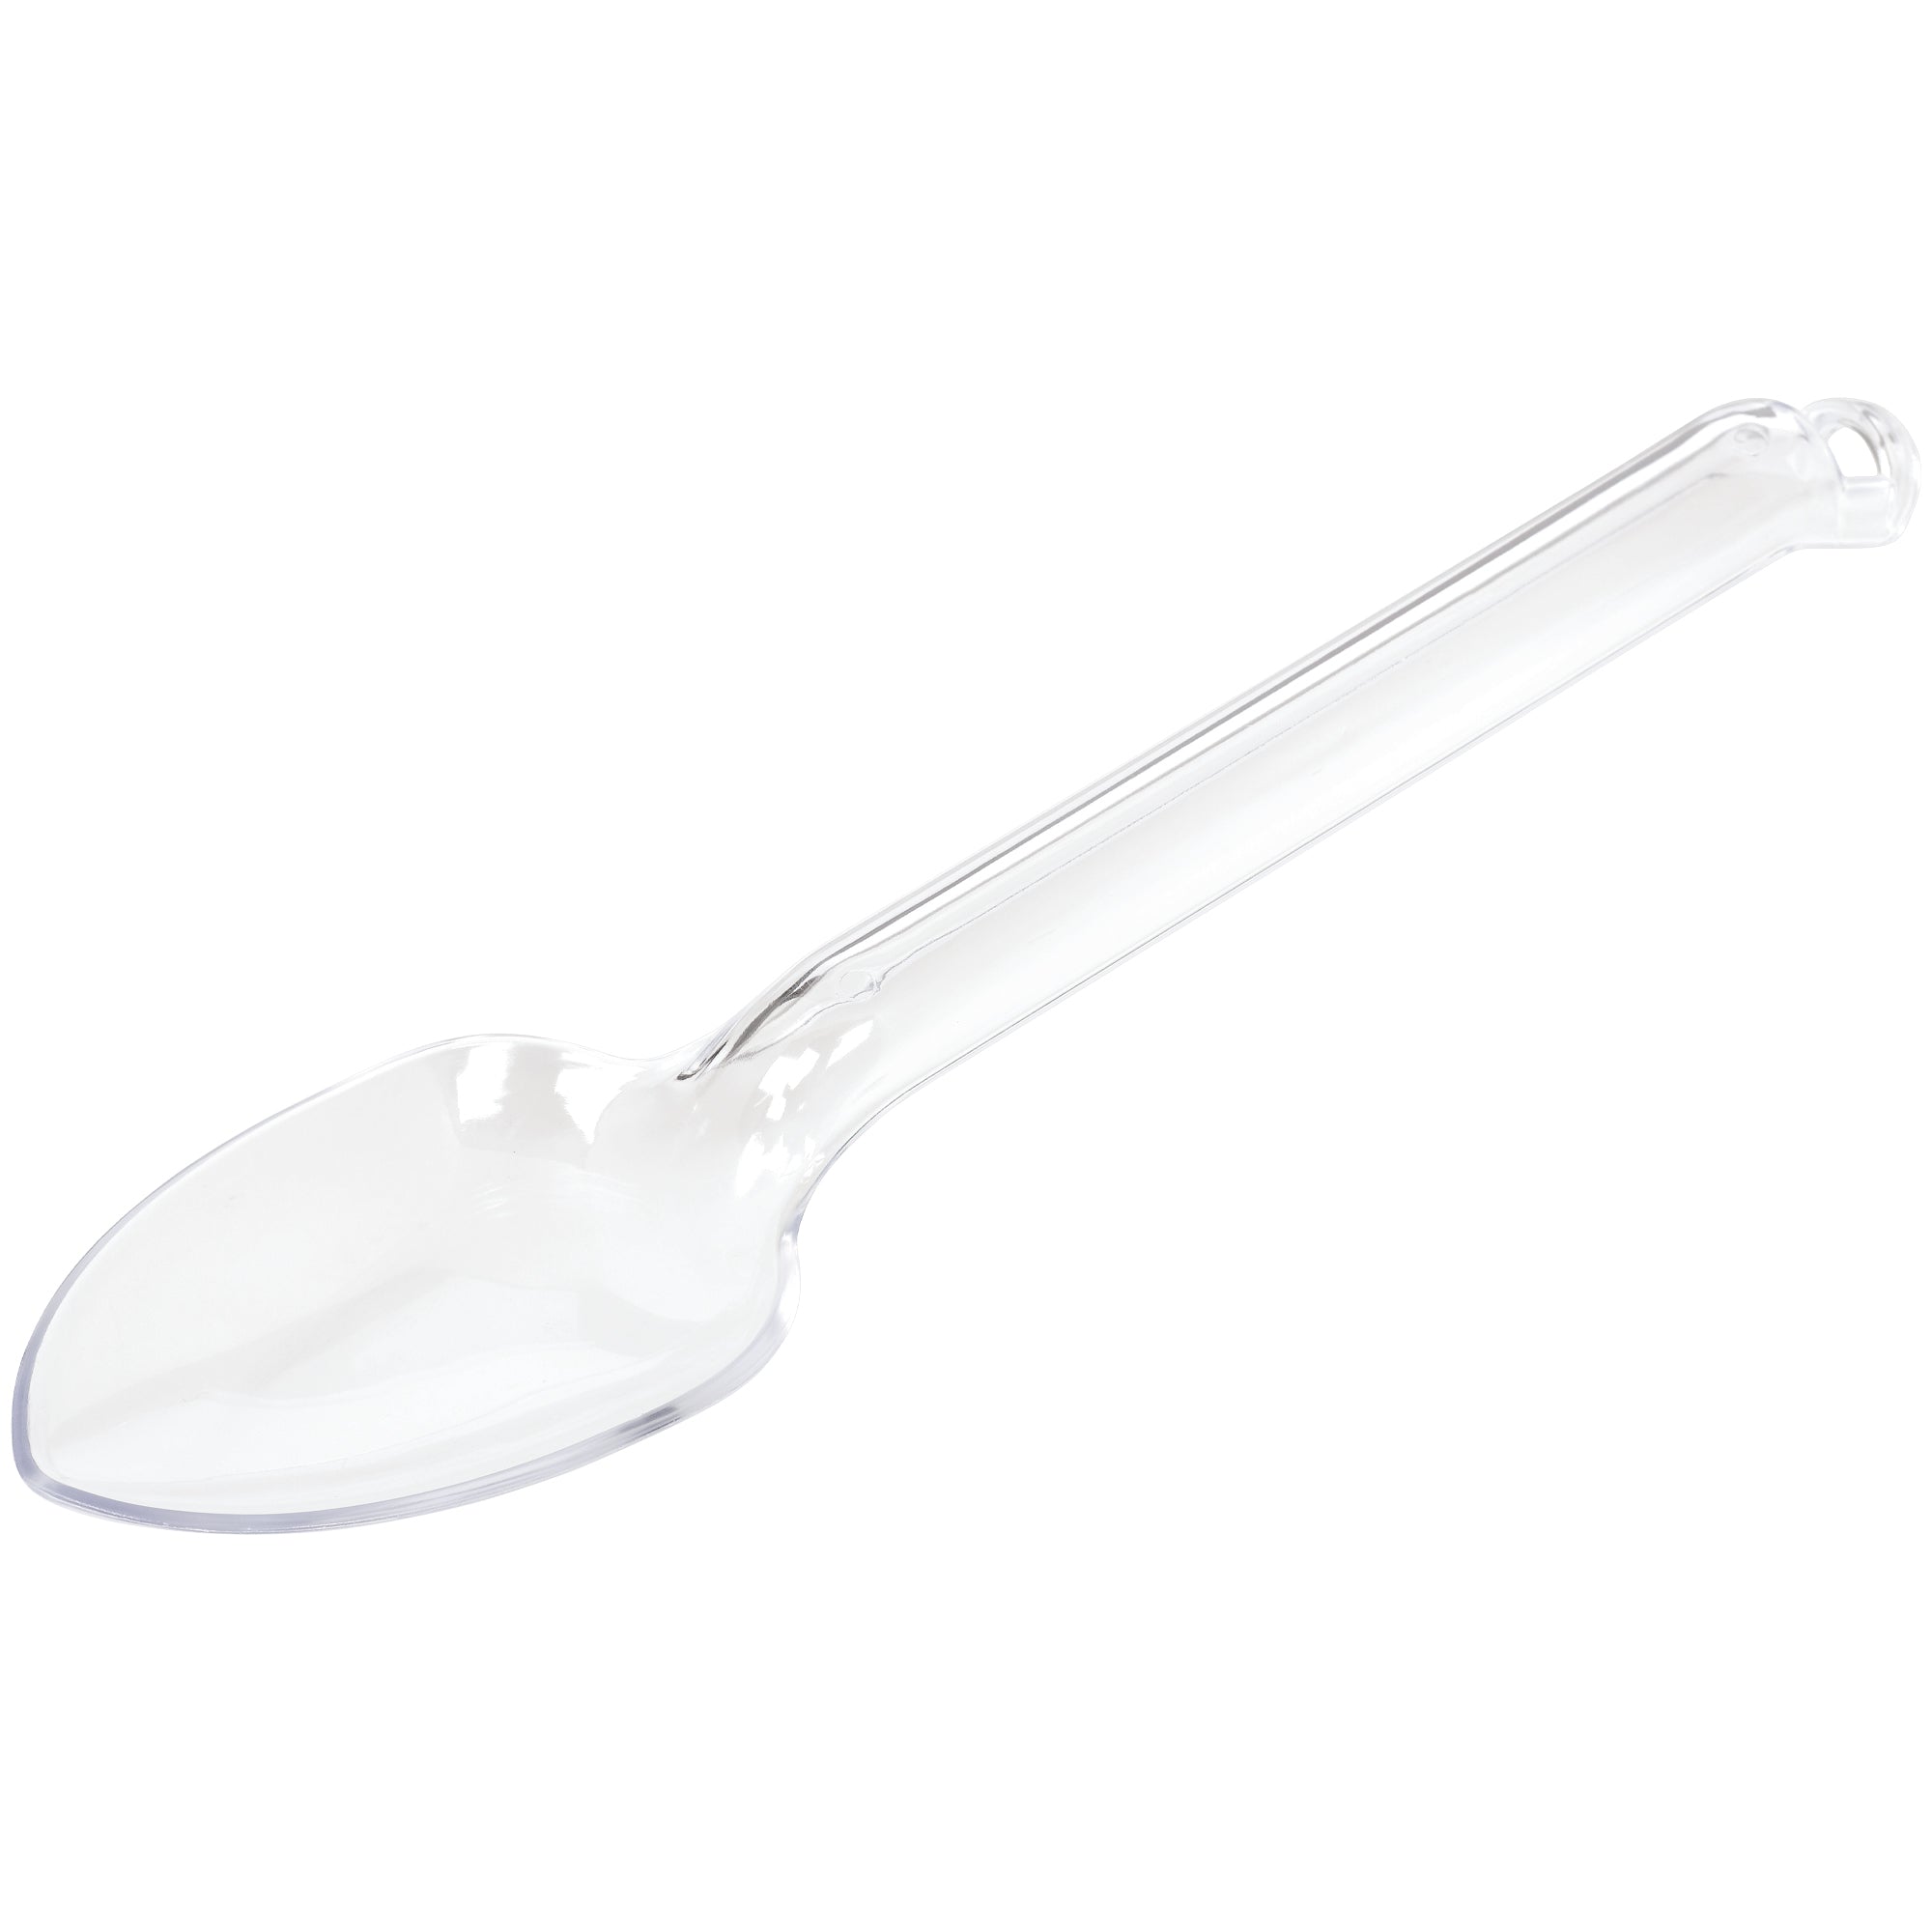 Clear PET Plastic Serving Spoon, 1 Count